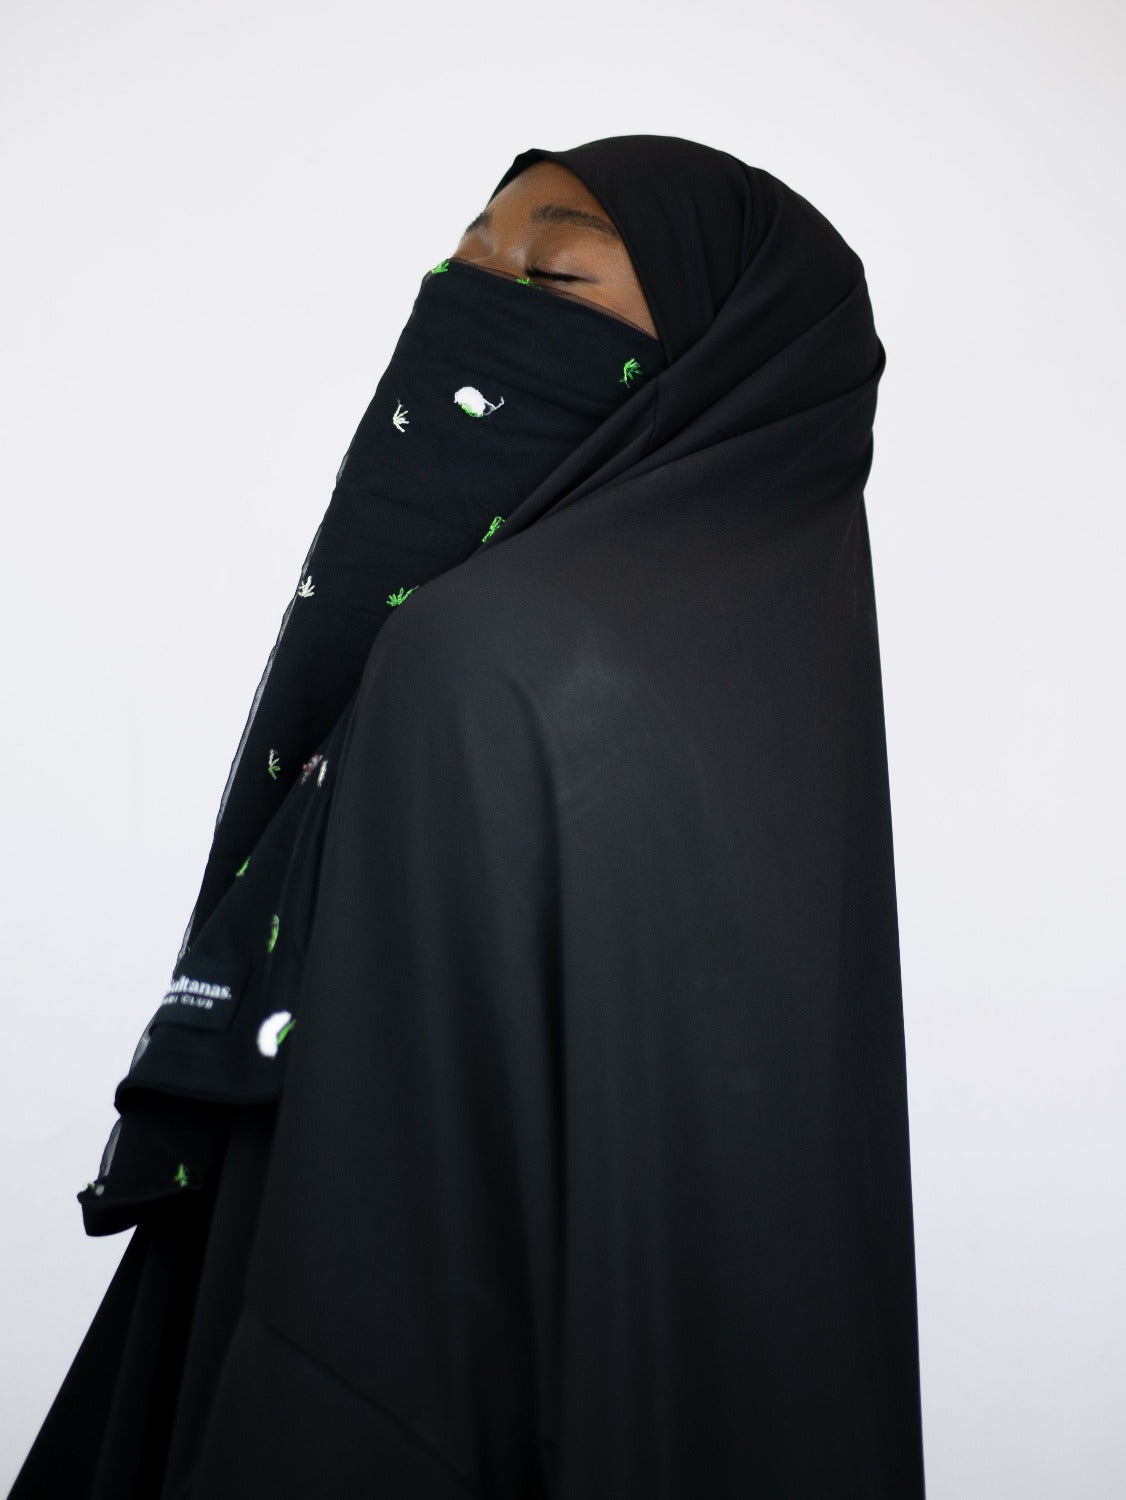 Diadem Chiffon and Tulle Niqab, Rebel Princess